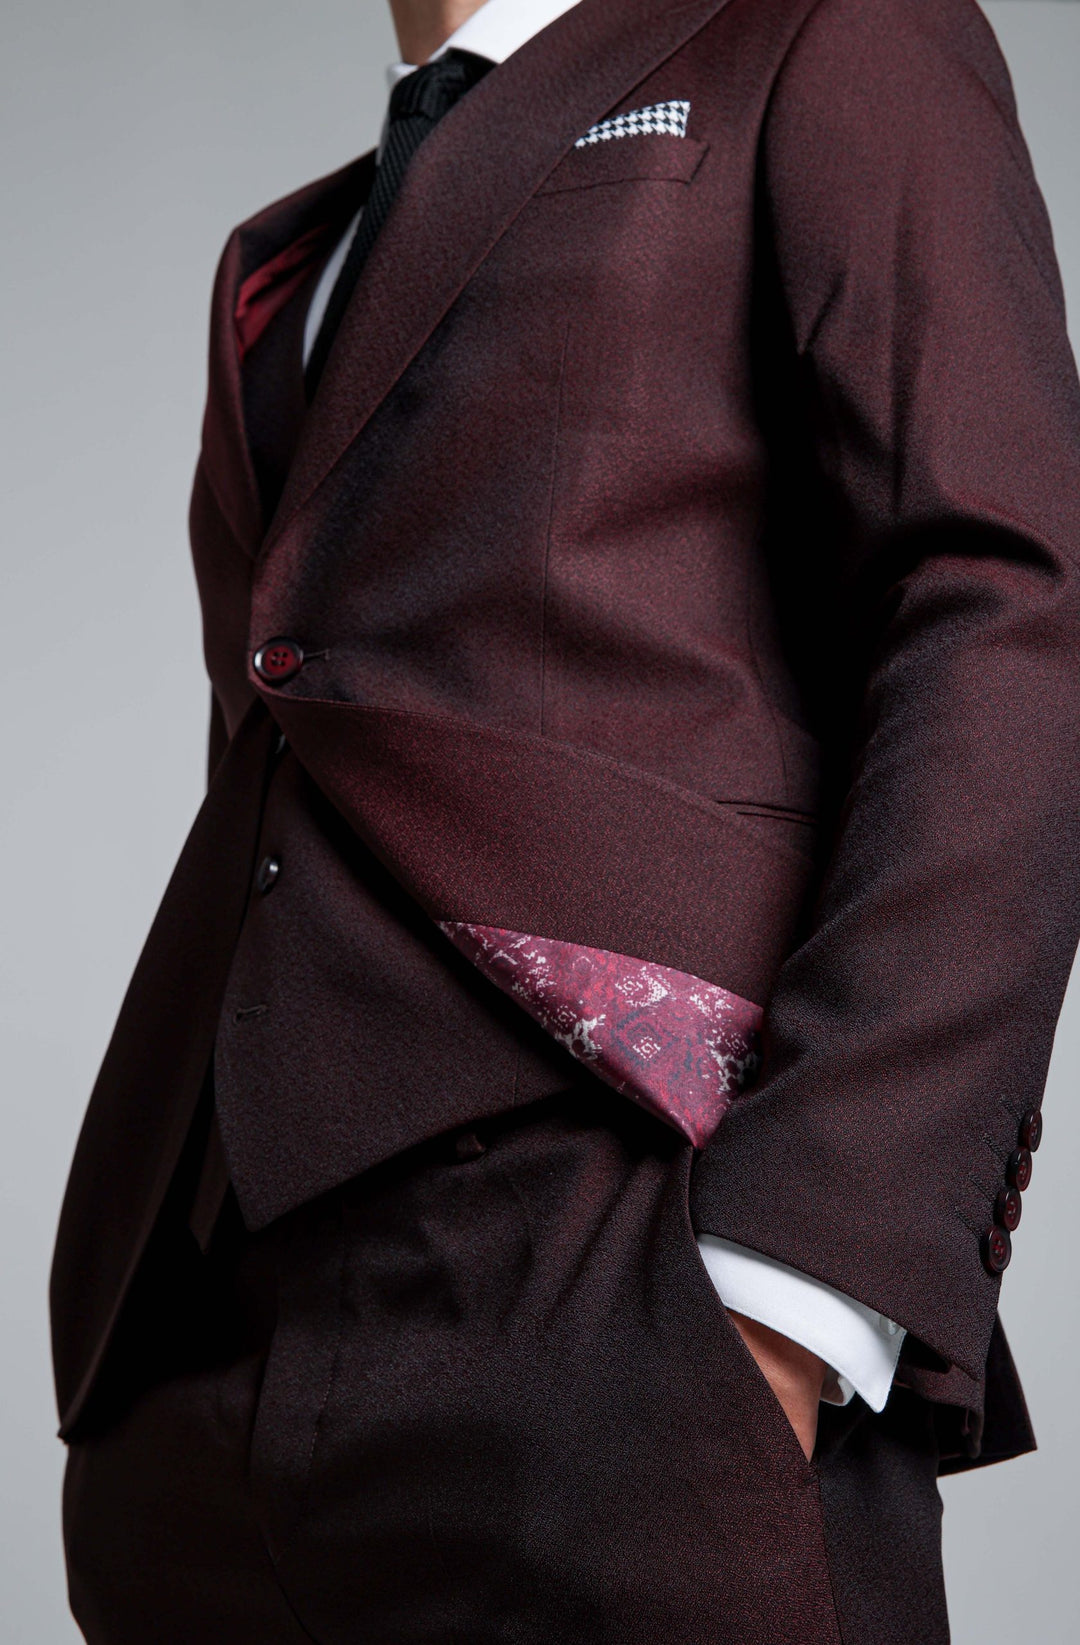 Three-piece burgundy suit